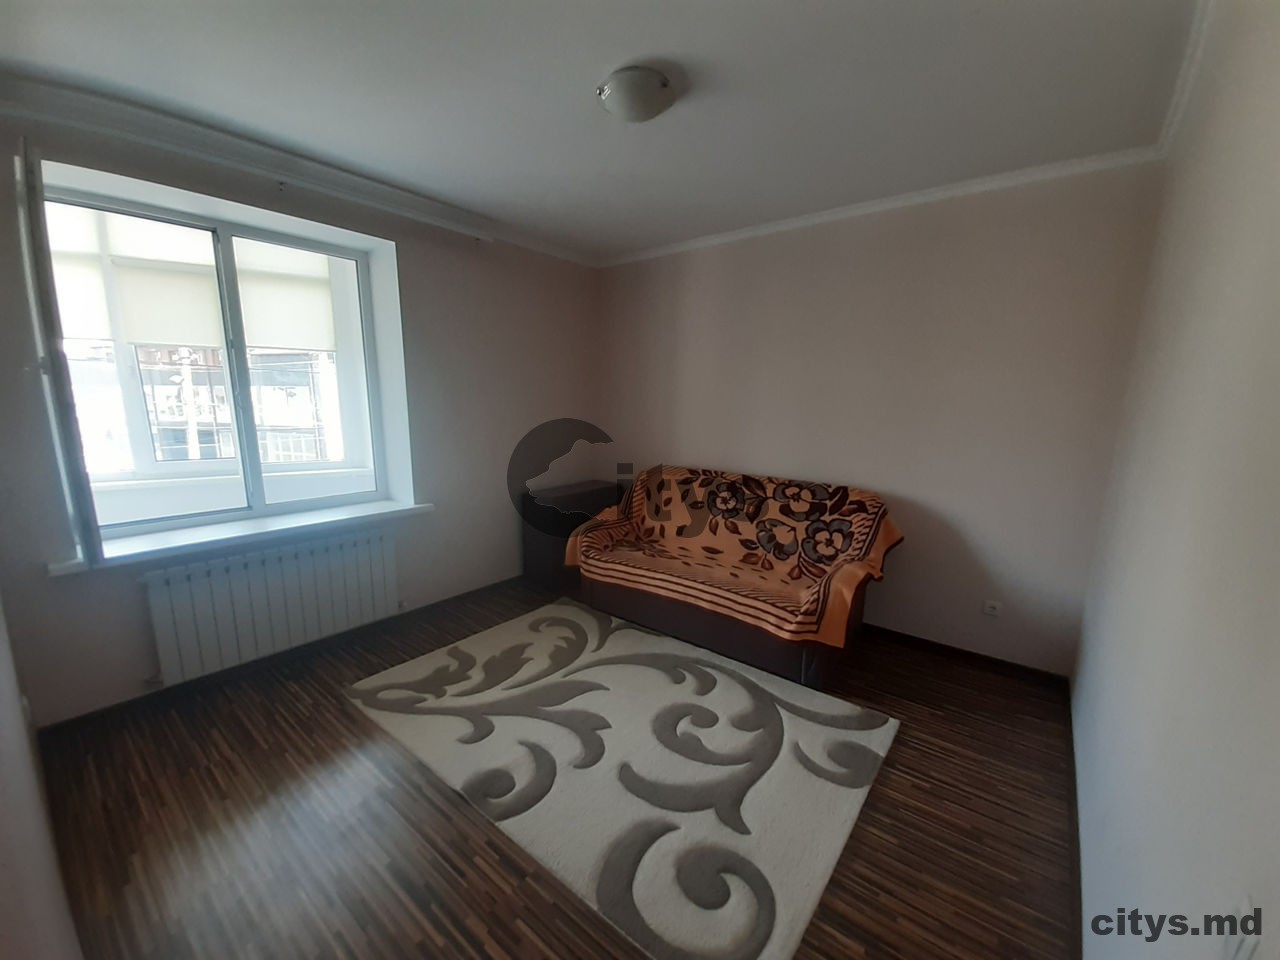 2-х комнатная квартира, 63м², Chișinău, Buiucani, str-la Renașterii photo 2